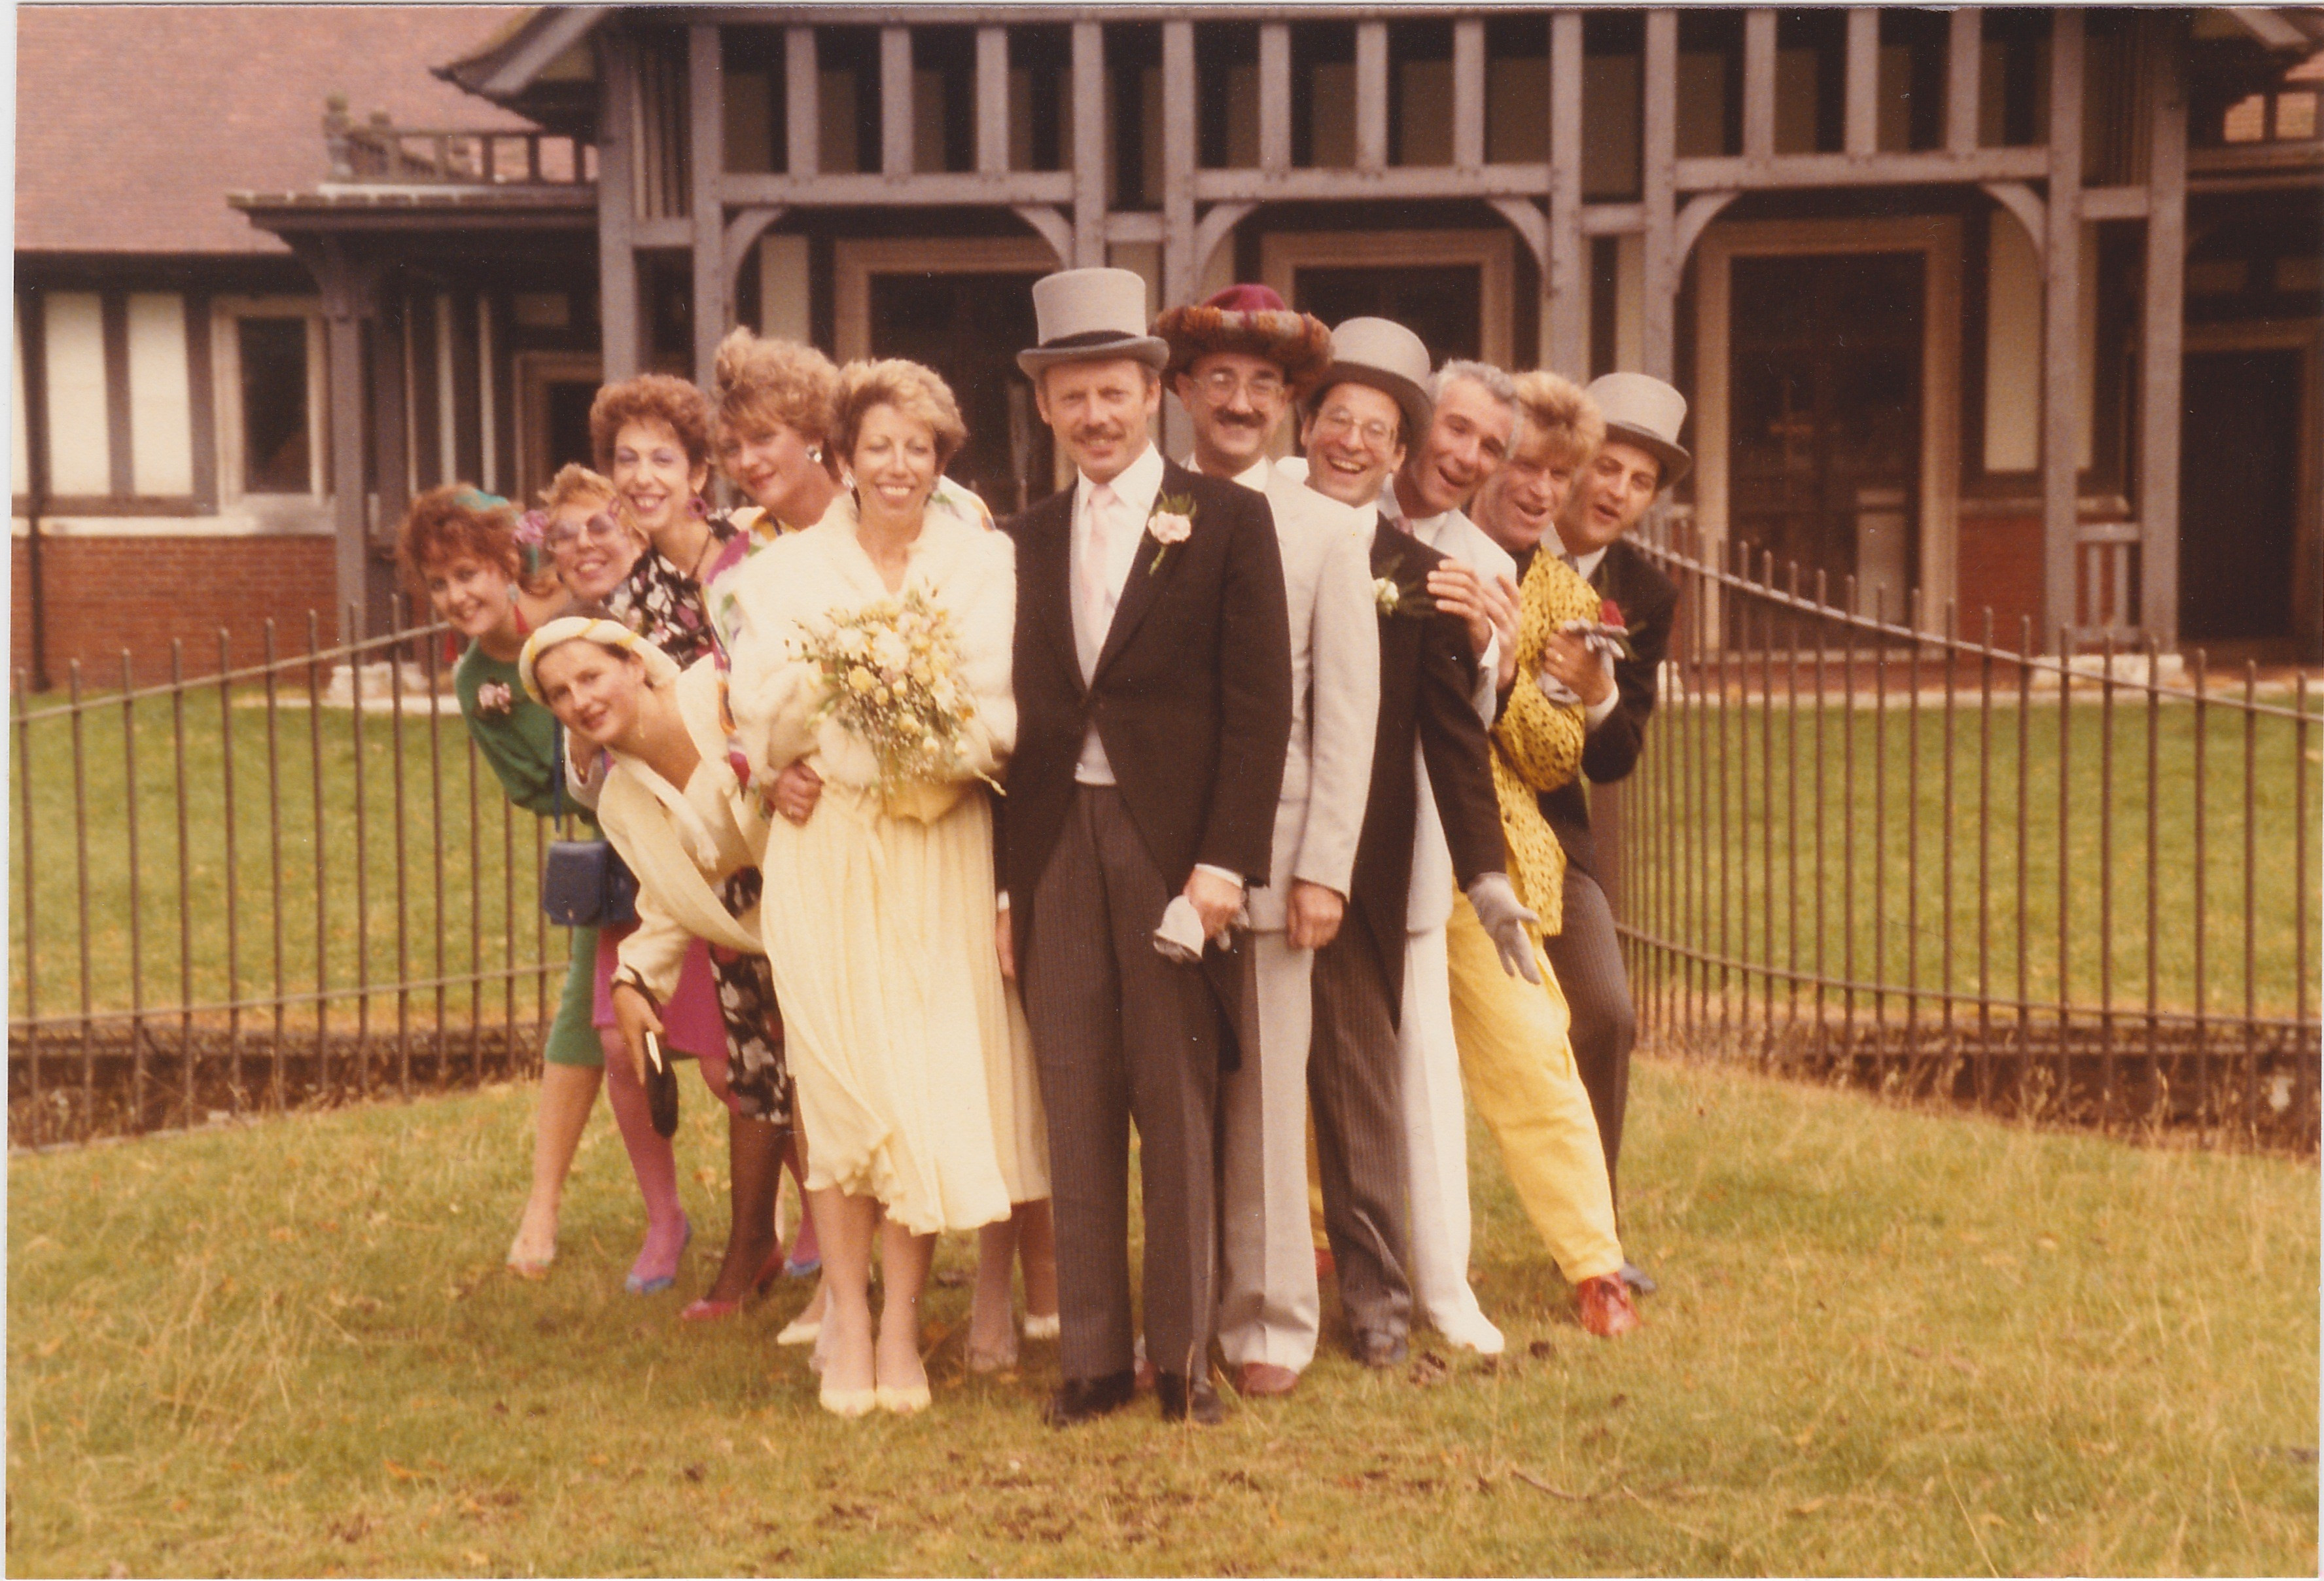 Alice and Jeffrey Frankel's wedding photo